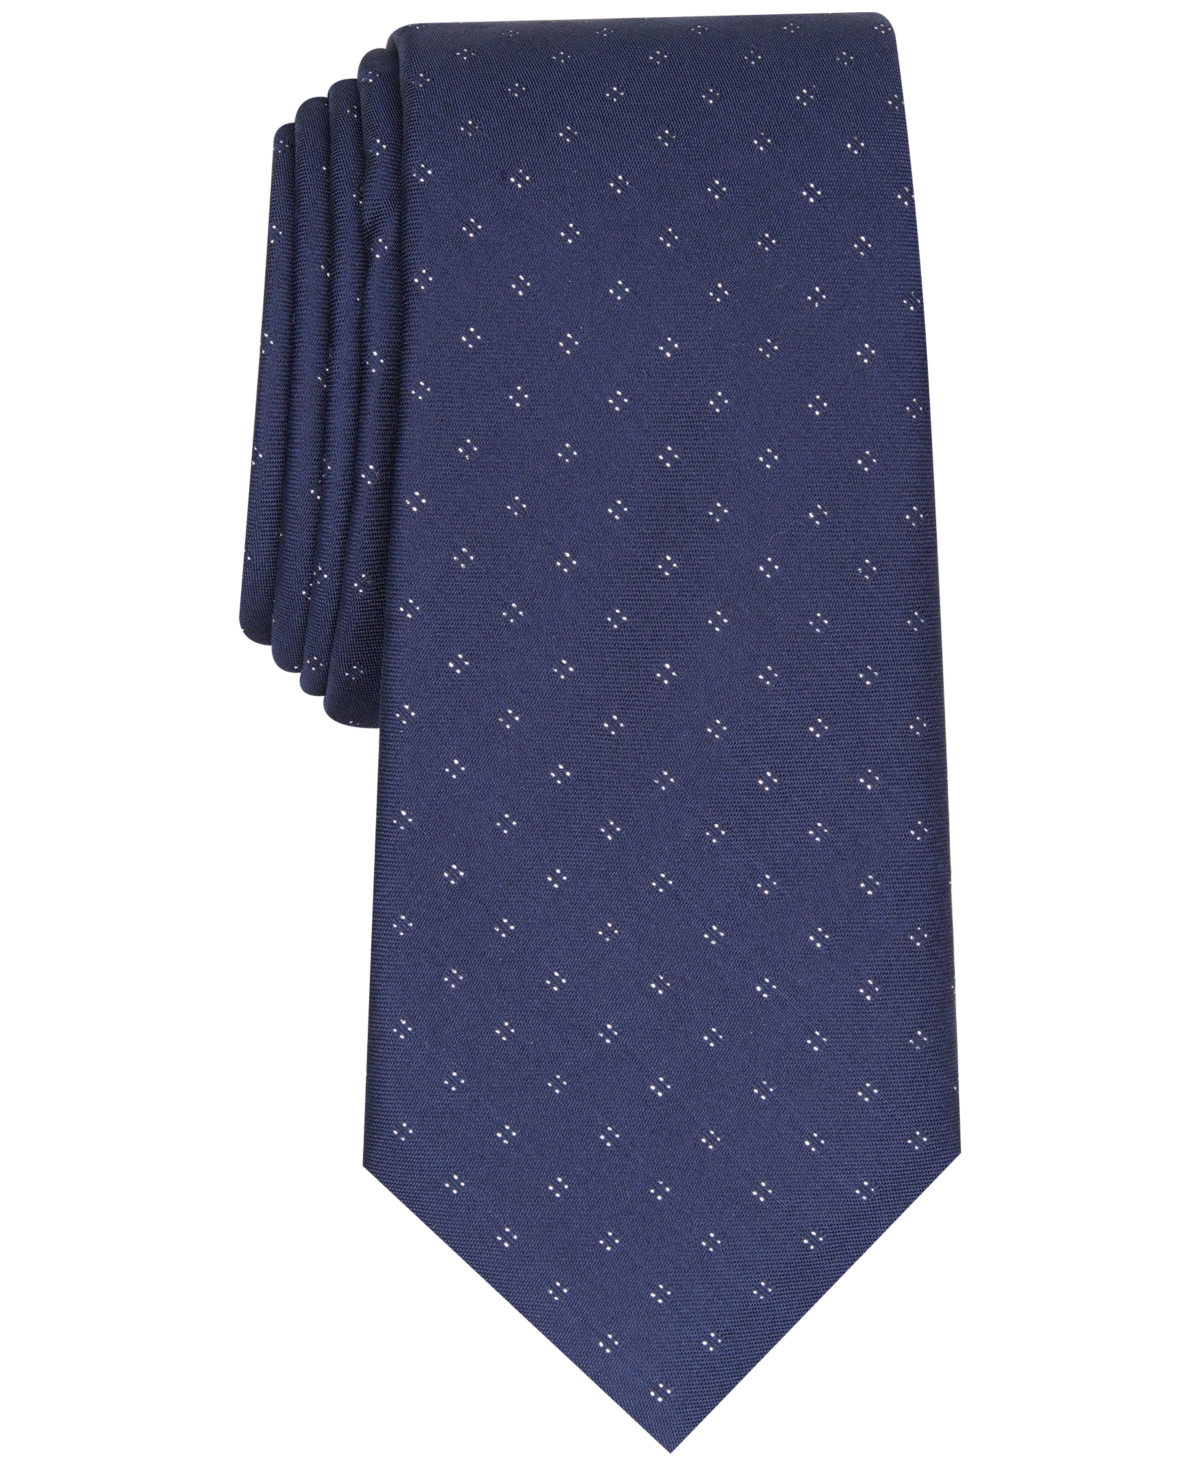 Men's Trillo Slim Neat Tie, Created for Macy's - Navy